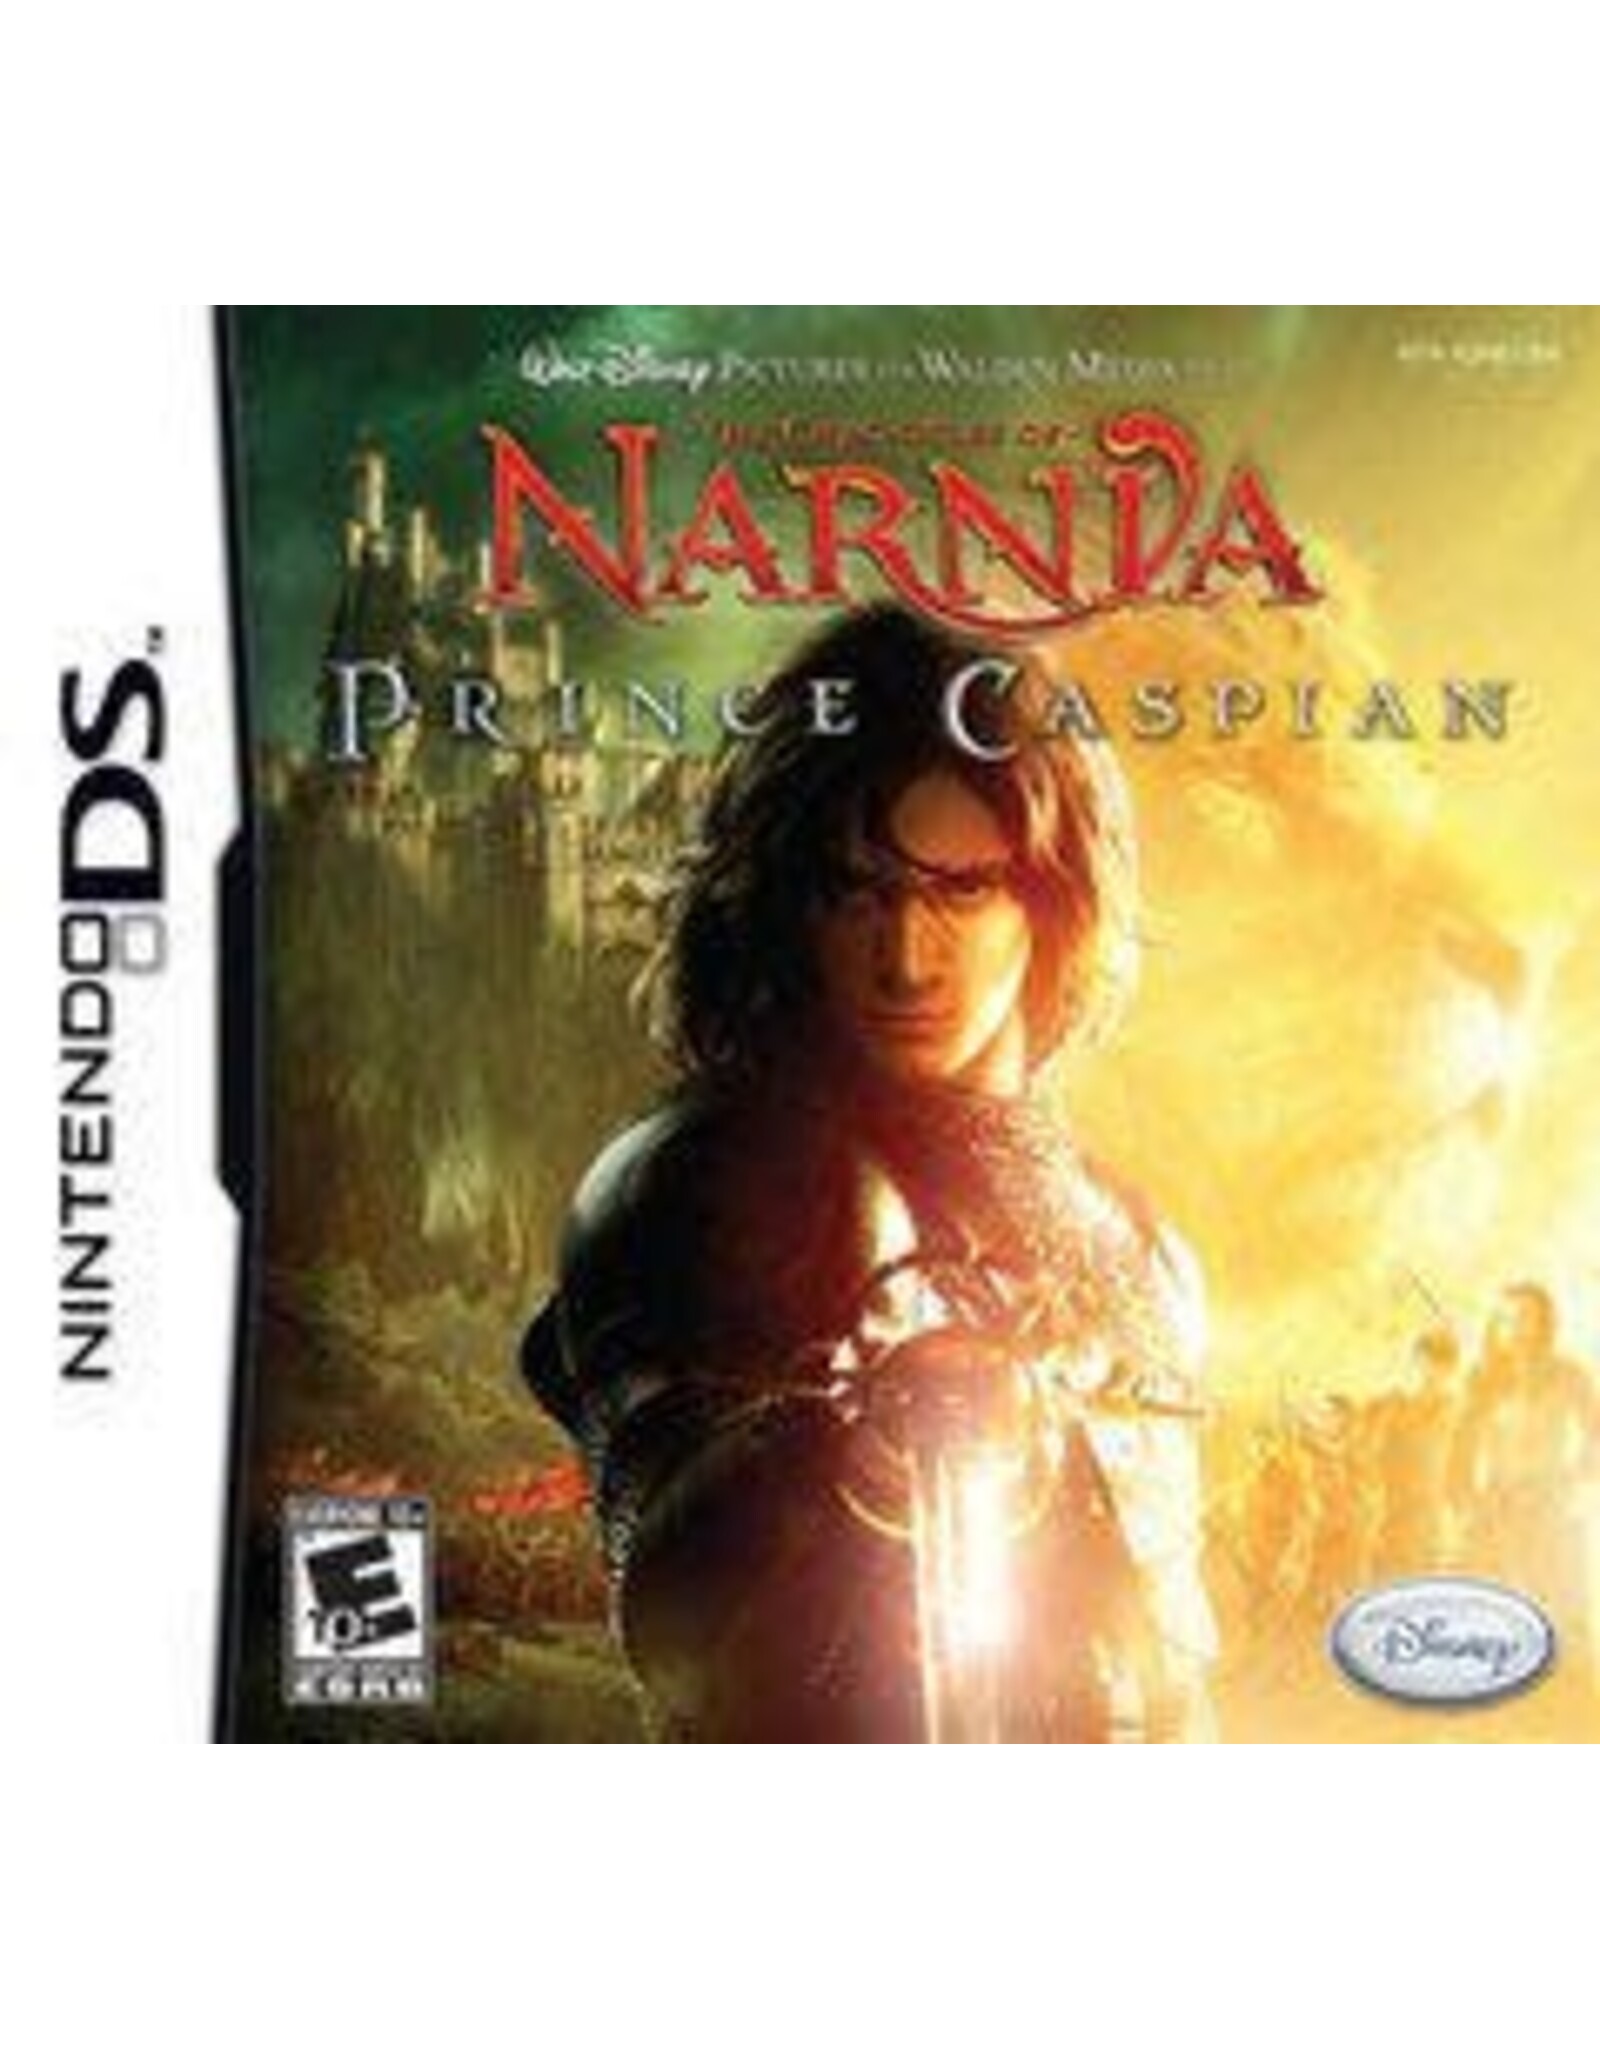 Nintendo DS Chronicles of Narnia Prince Caspian (CiB)